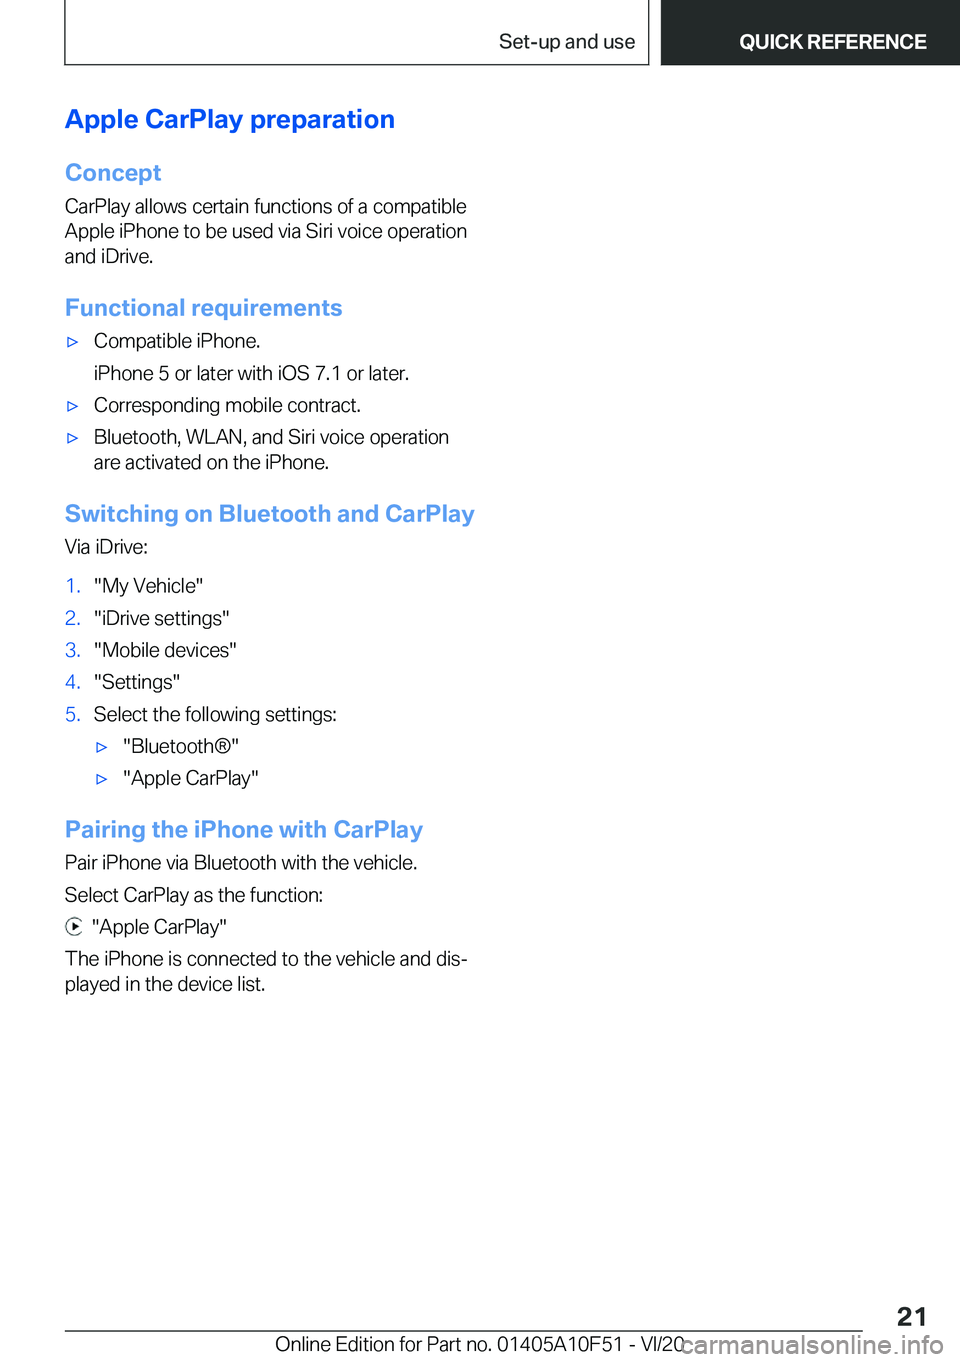 BMW X4 2021 Owners Manual �A�p�p�l�e��C�a�r�P�l�a�y��p�r�e�p�a�r�a�t�i�o�n�C�o�n�c�e�p�t
�C�a�r�P�l�a�y��a�l�l�o�w�s��c�e�r�t�a�i�n��f�u�n�c�t�i�o�n�s��o�f��a��c�o�m�p�a�t�i�b�l�e
�A�p�p�l�e��i�P�h�o�n�e��t�o��b�e�